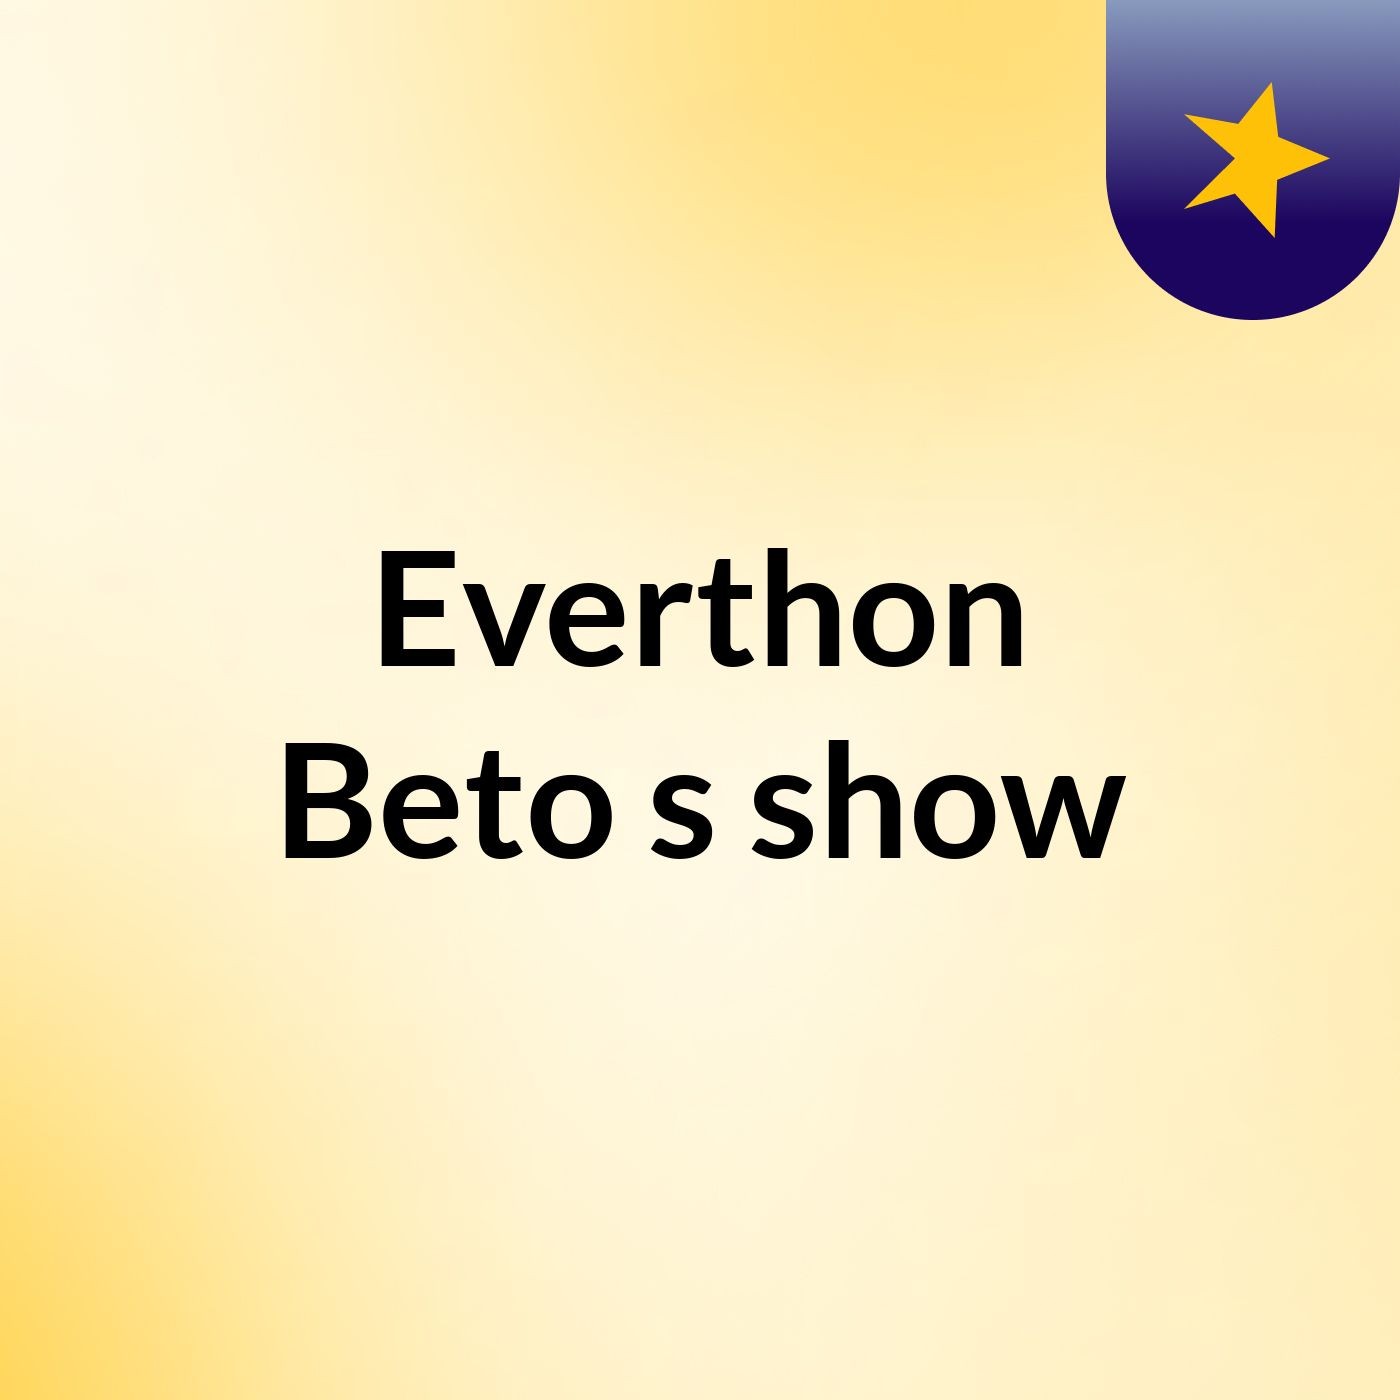 Everthon Beto's show